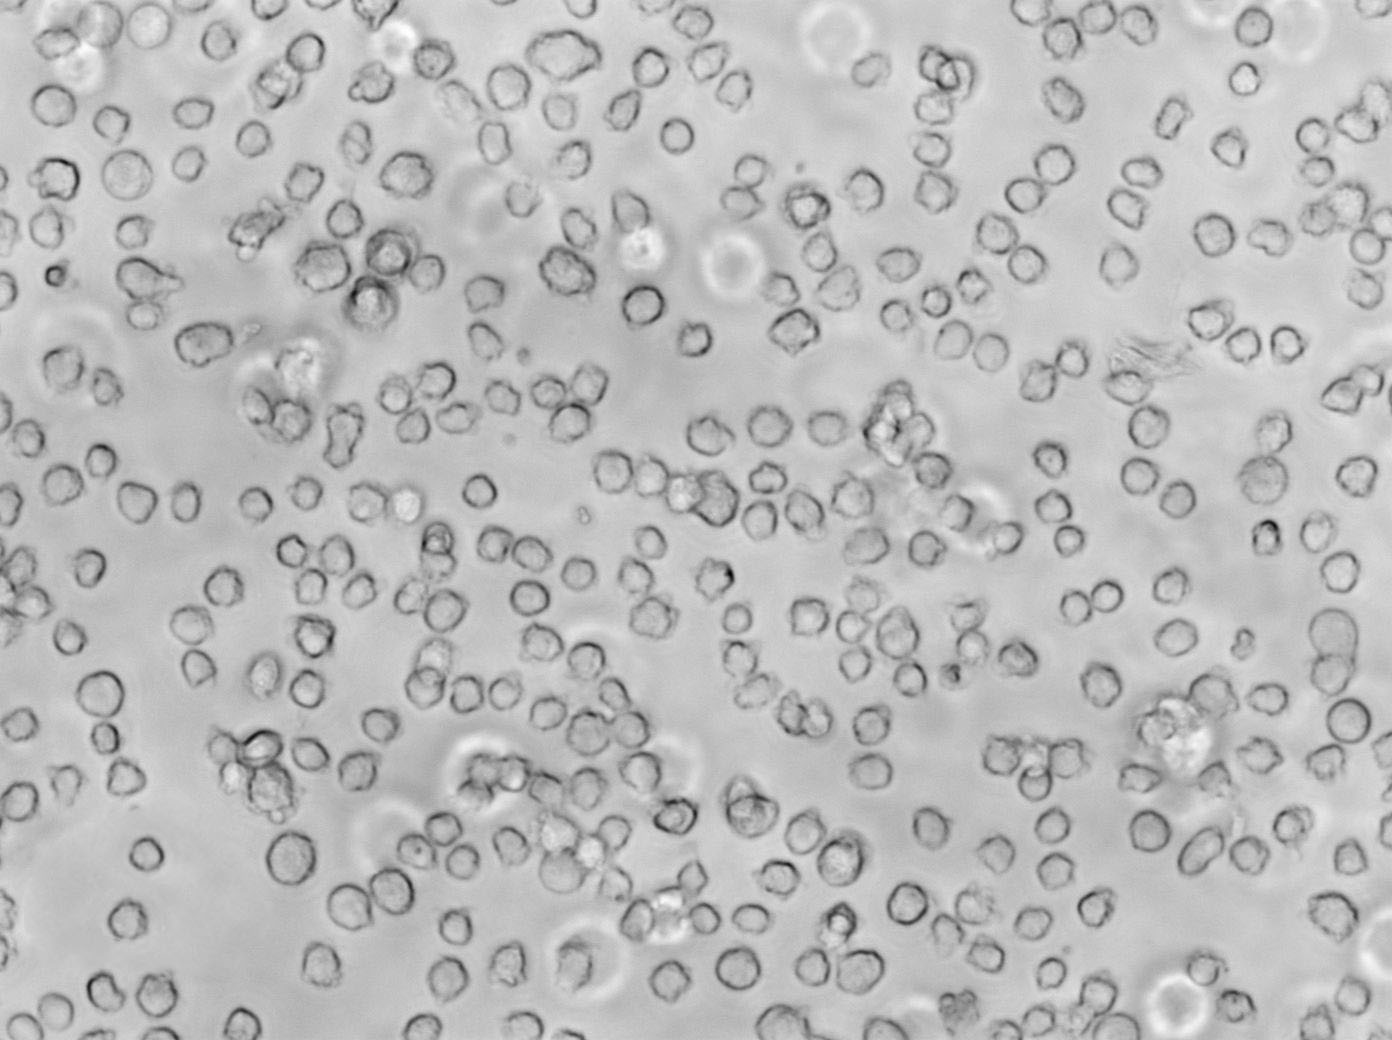 Jurkat Cell|人急性T淋巴细胞白血病细胞